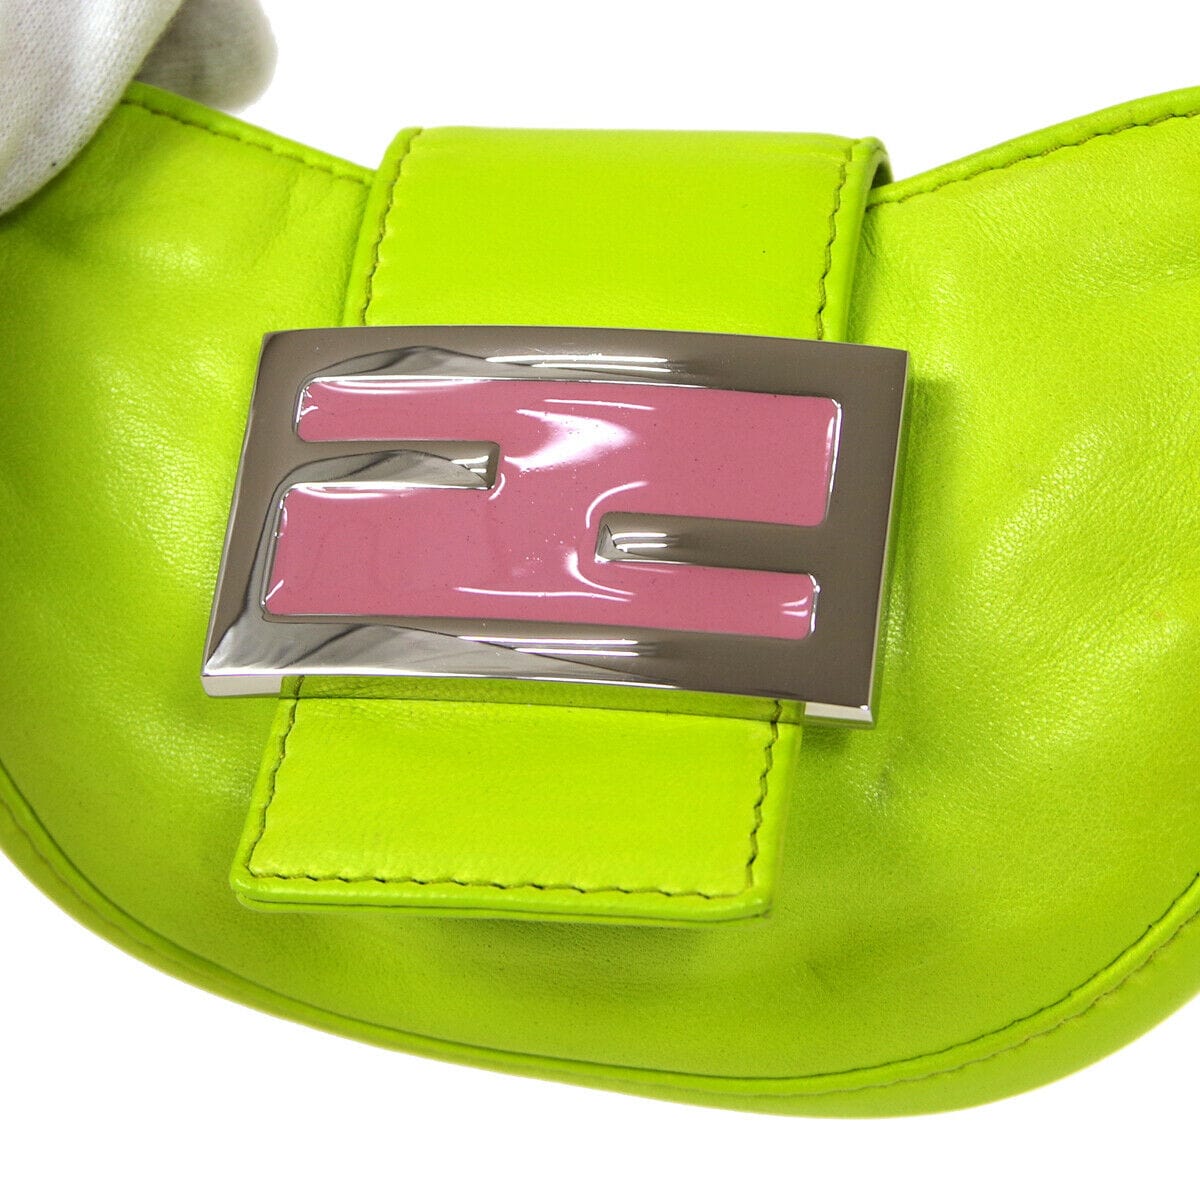 Chanel Fendi neon green mini bag UKL1072